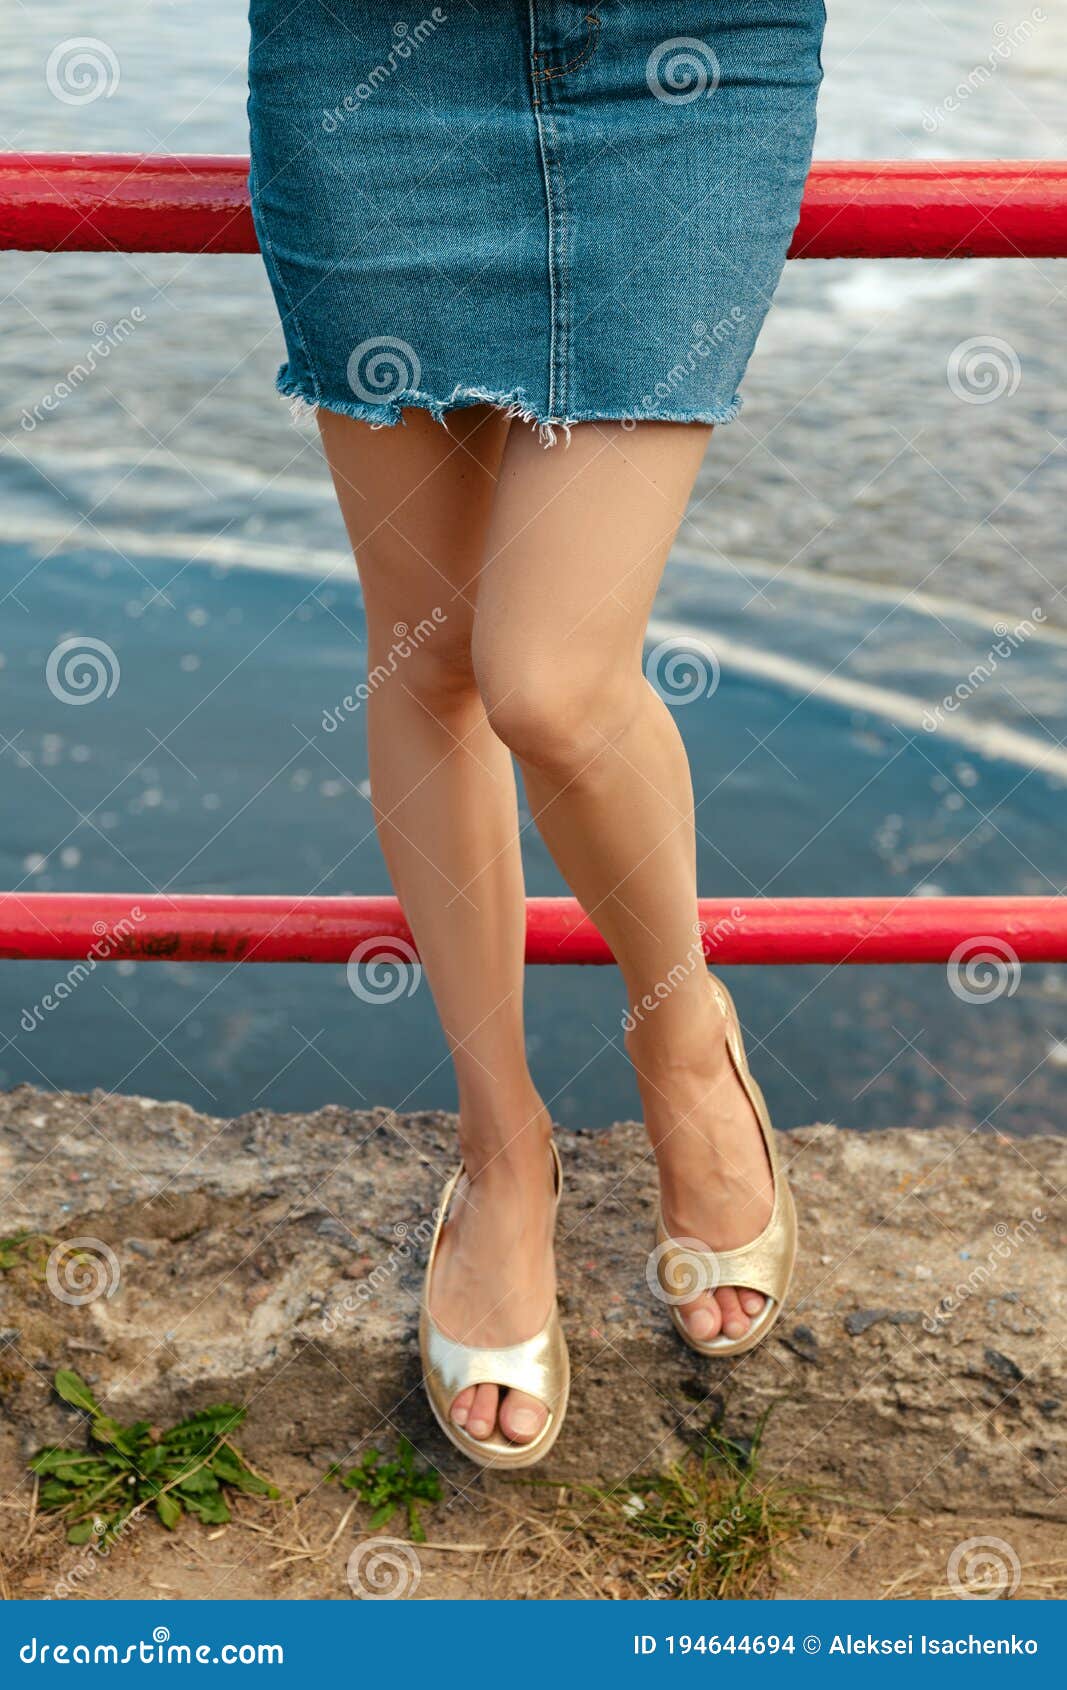 Jambes Femmes Nues En Jeans Jupe Et Sandales Photo Stock Image Du